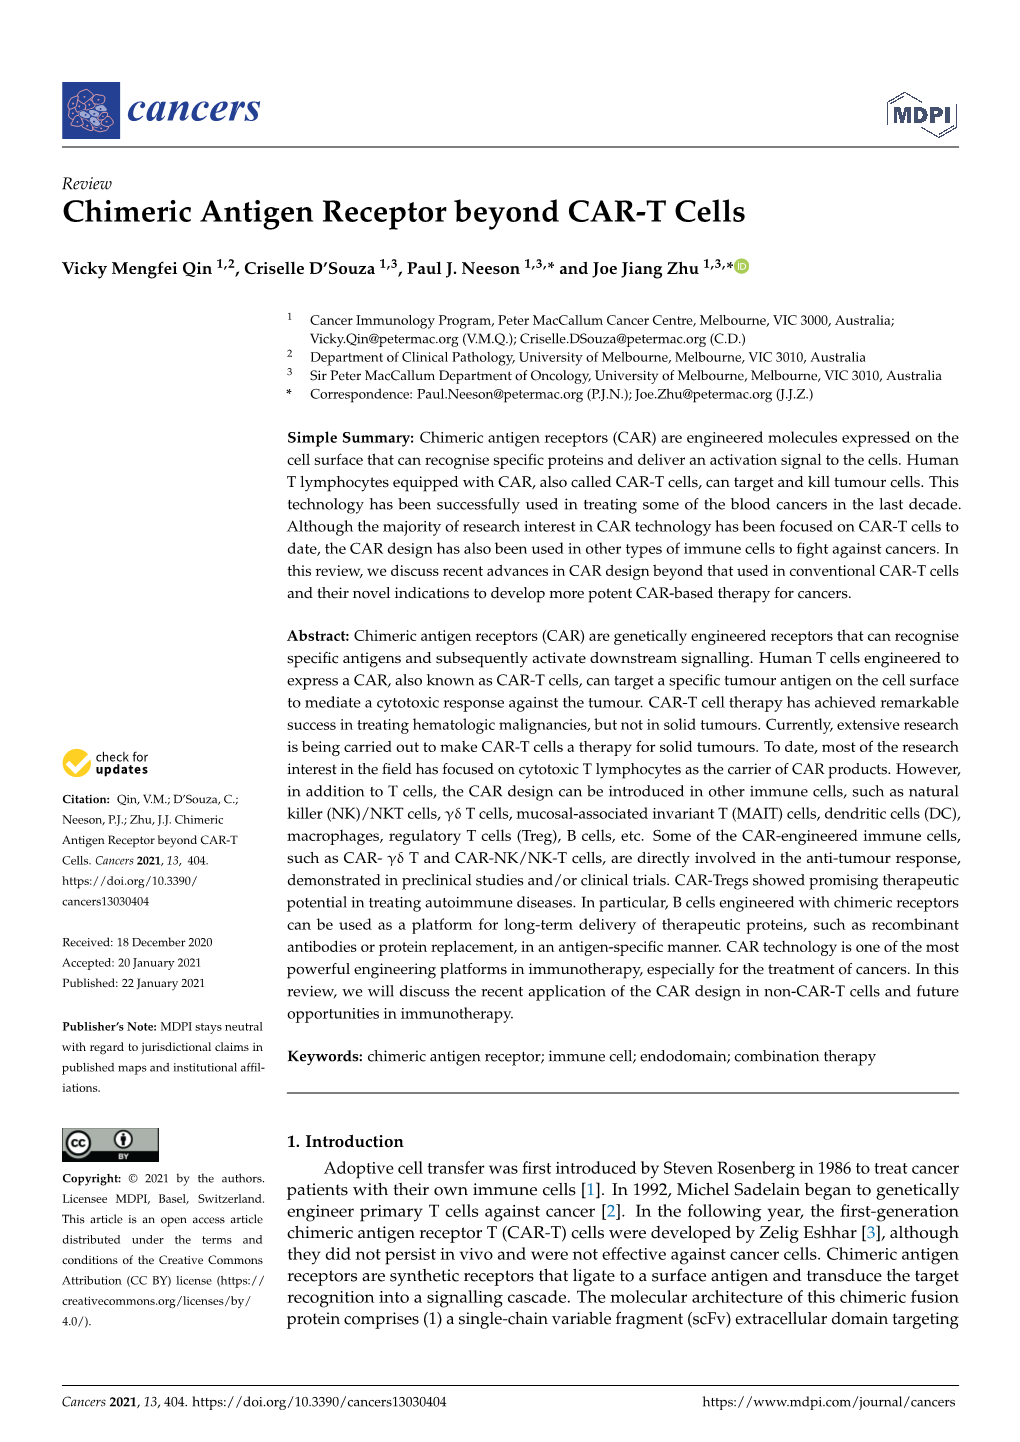 Chimeric Antigen Receptor Beyond CAR-T Cells